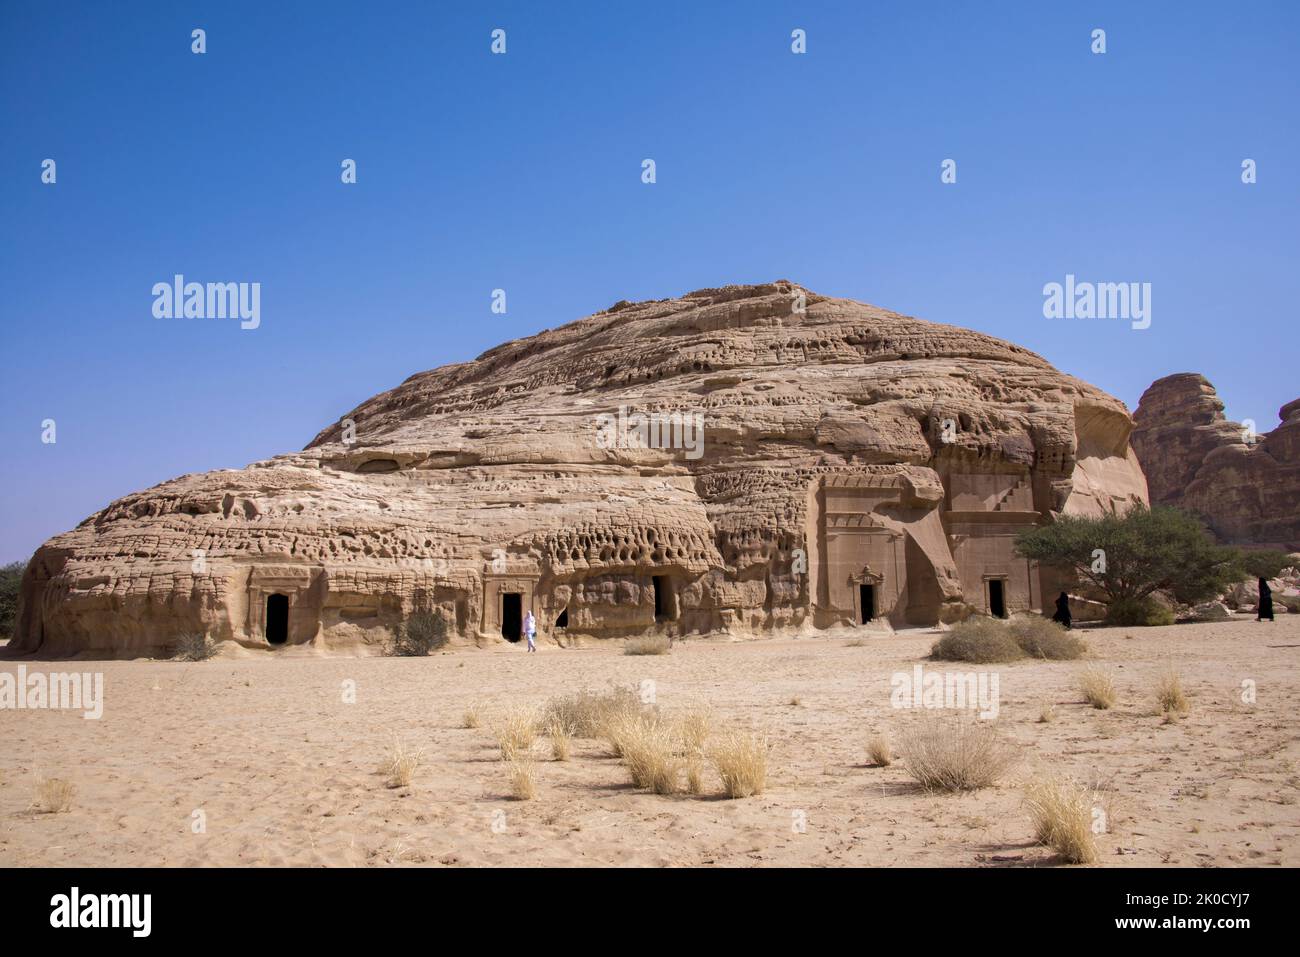 Vista panoramica Jabal al Banat con tombe Hegra Arabia Saudita Foto Stock